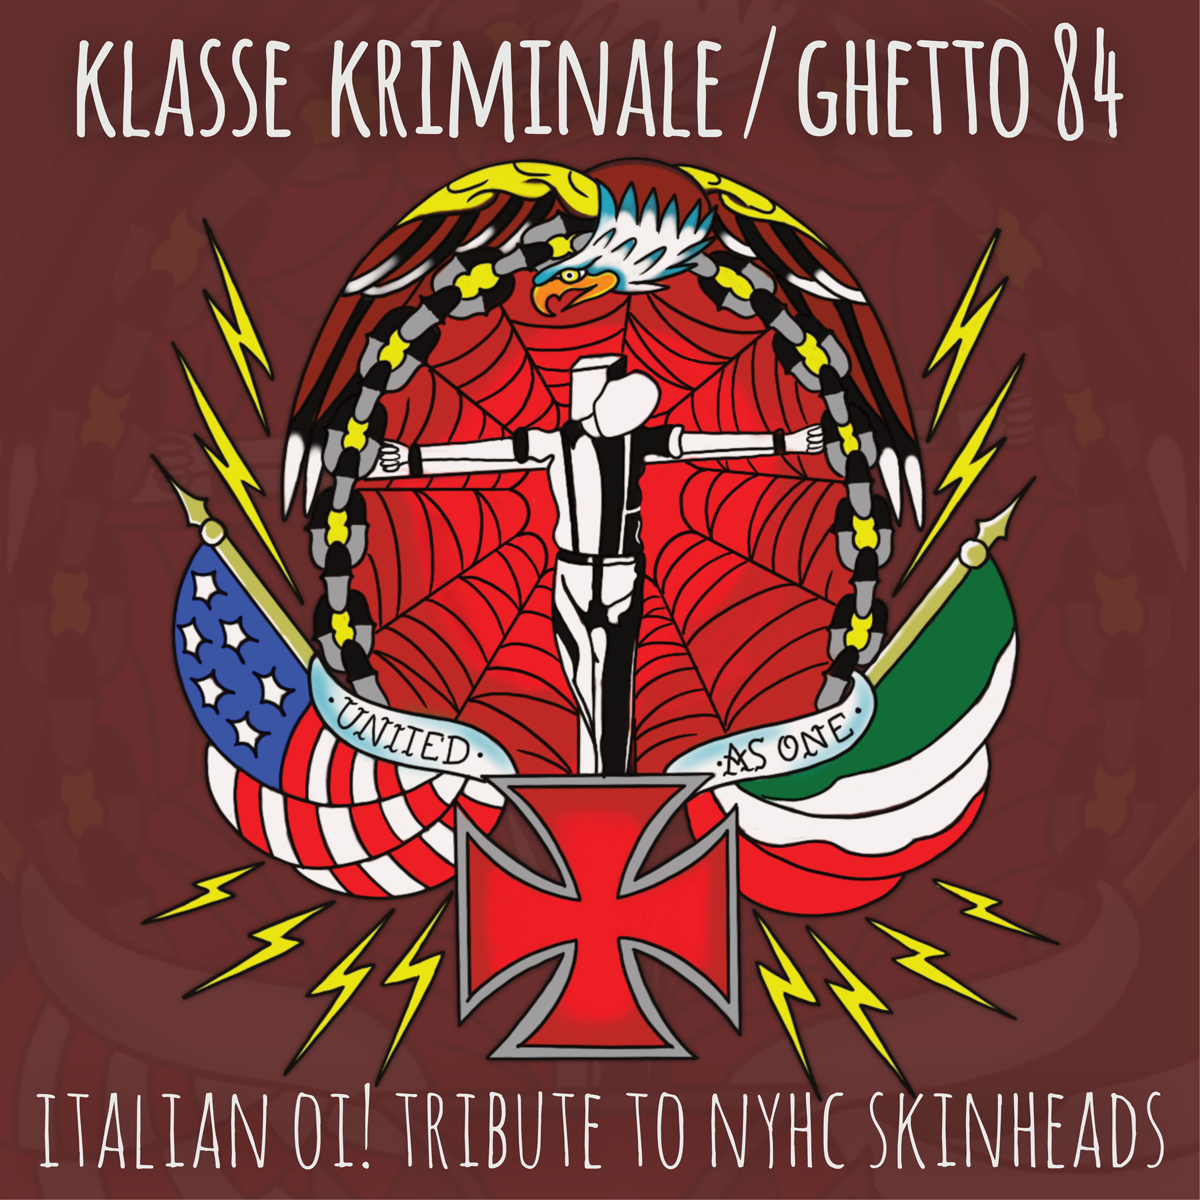 Klasse Kriminale / Ghetto 84 "Italian Oi! Tribute To NYHC Skinheads"